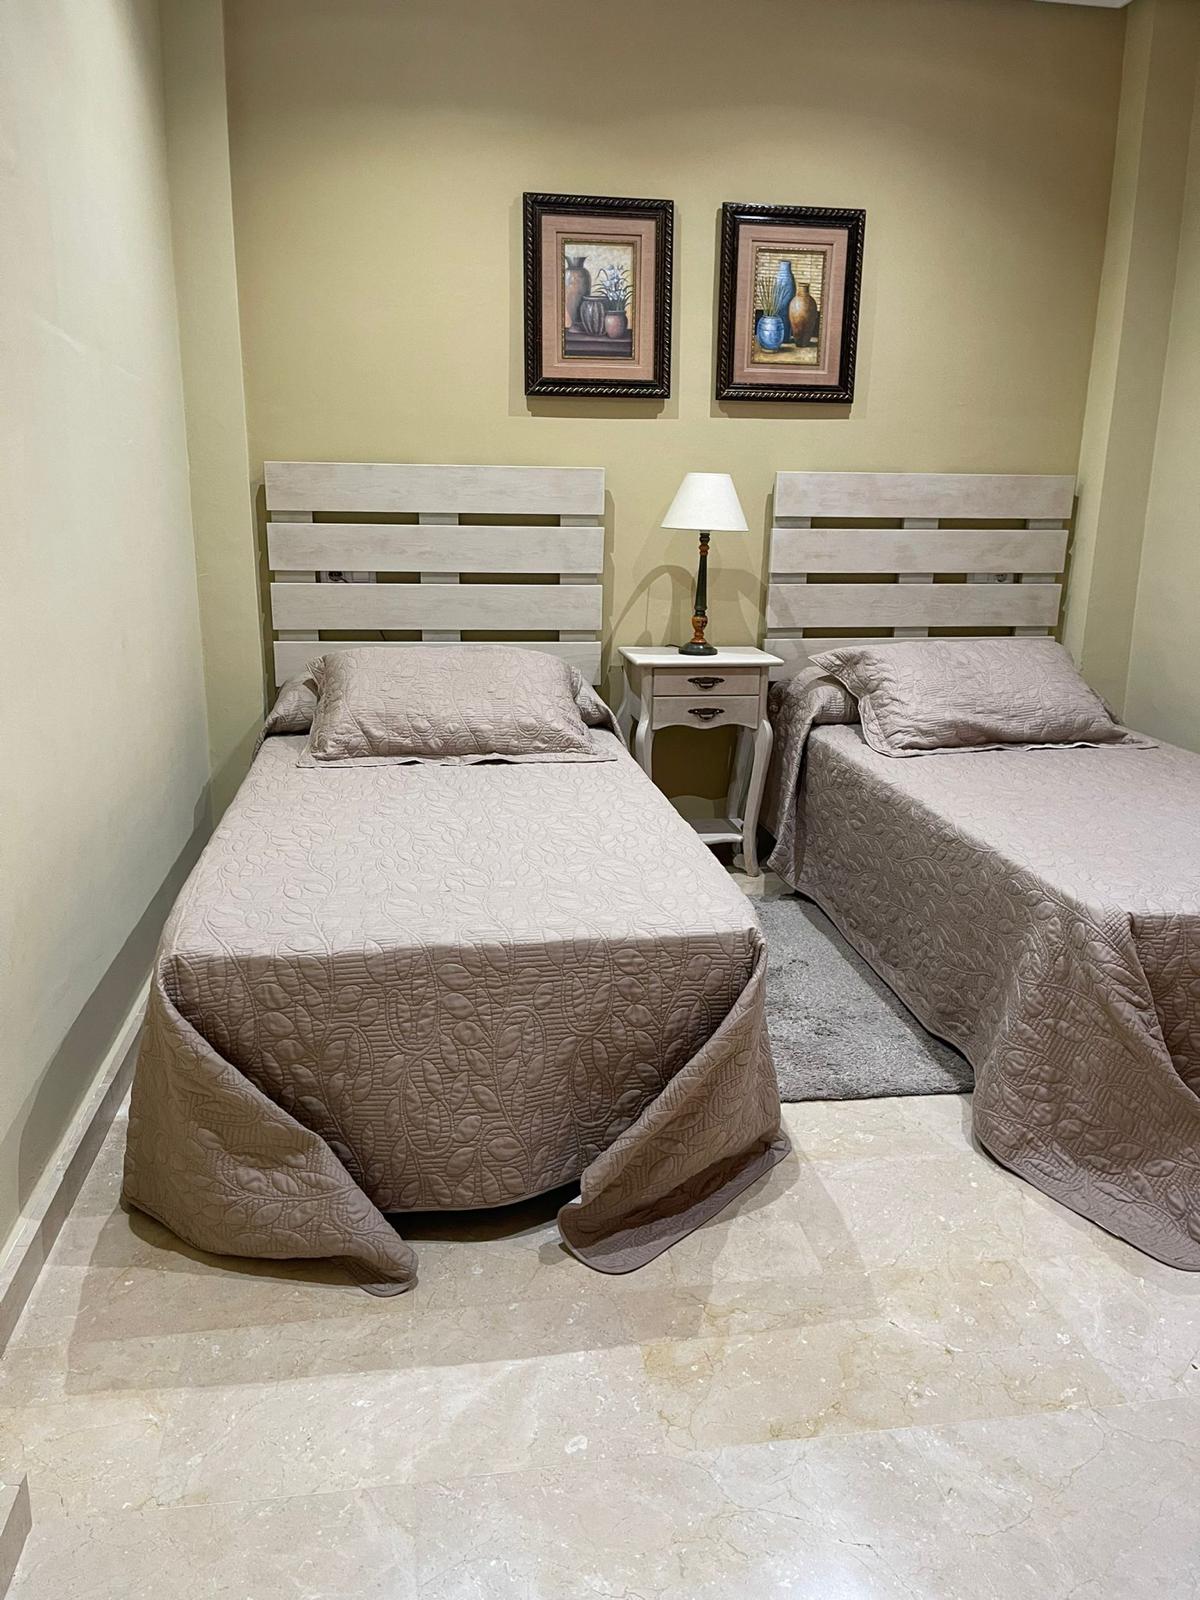 FANTASTIC 2 BEDS FULLY UPGRADED MOJON HILLS